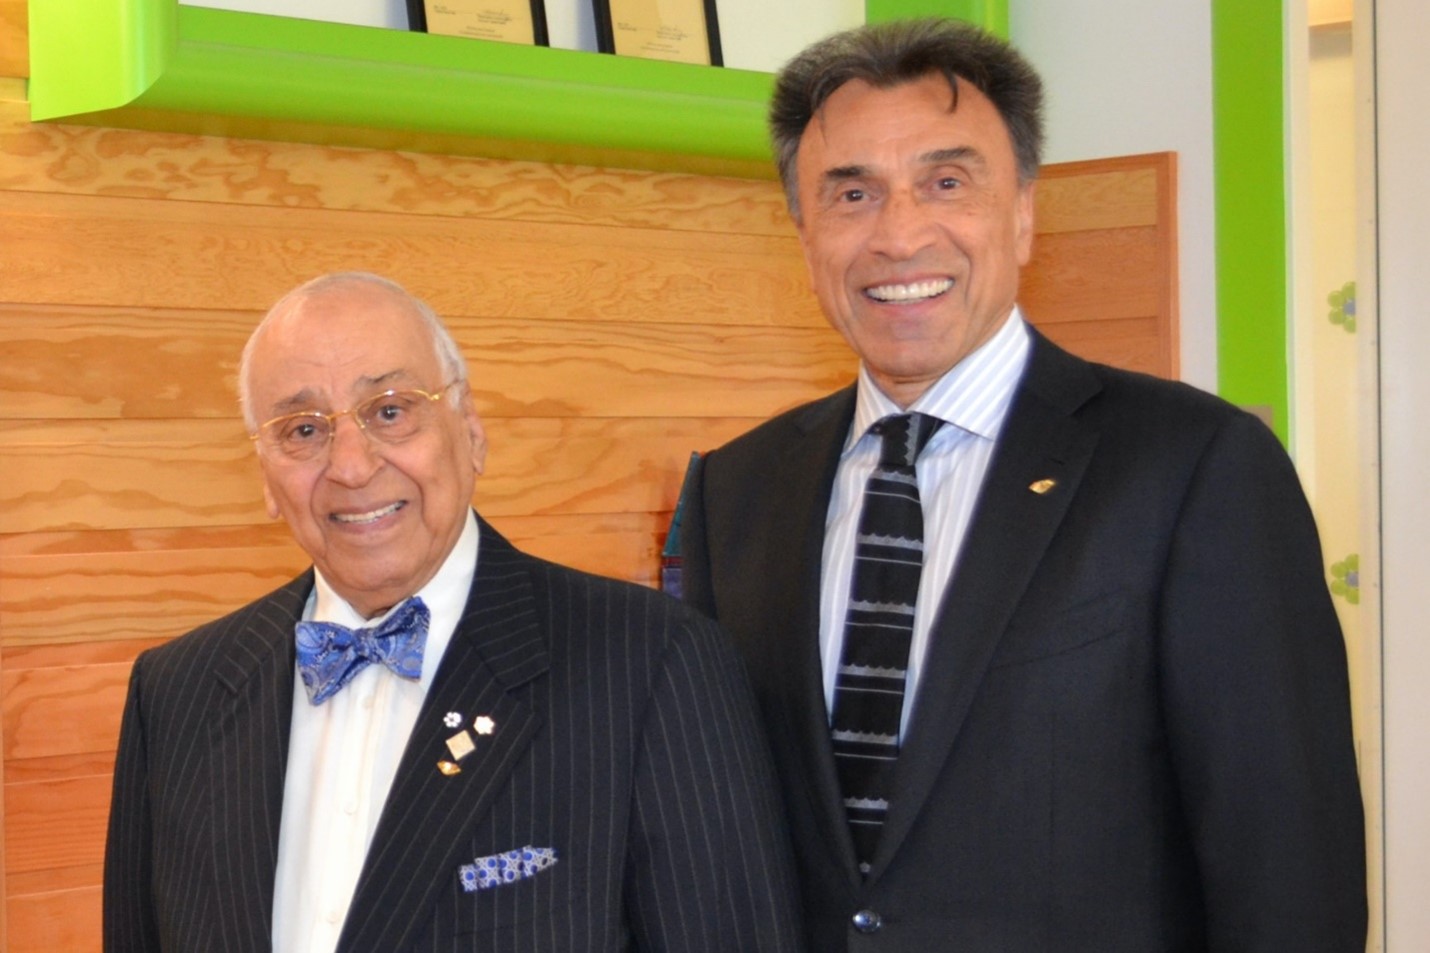 Dr. Djavad Mowafaghian (left) and his nephew Hamid Eshghi, President of the Djavad Mowafaghian Foundation